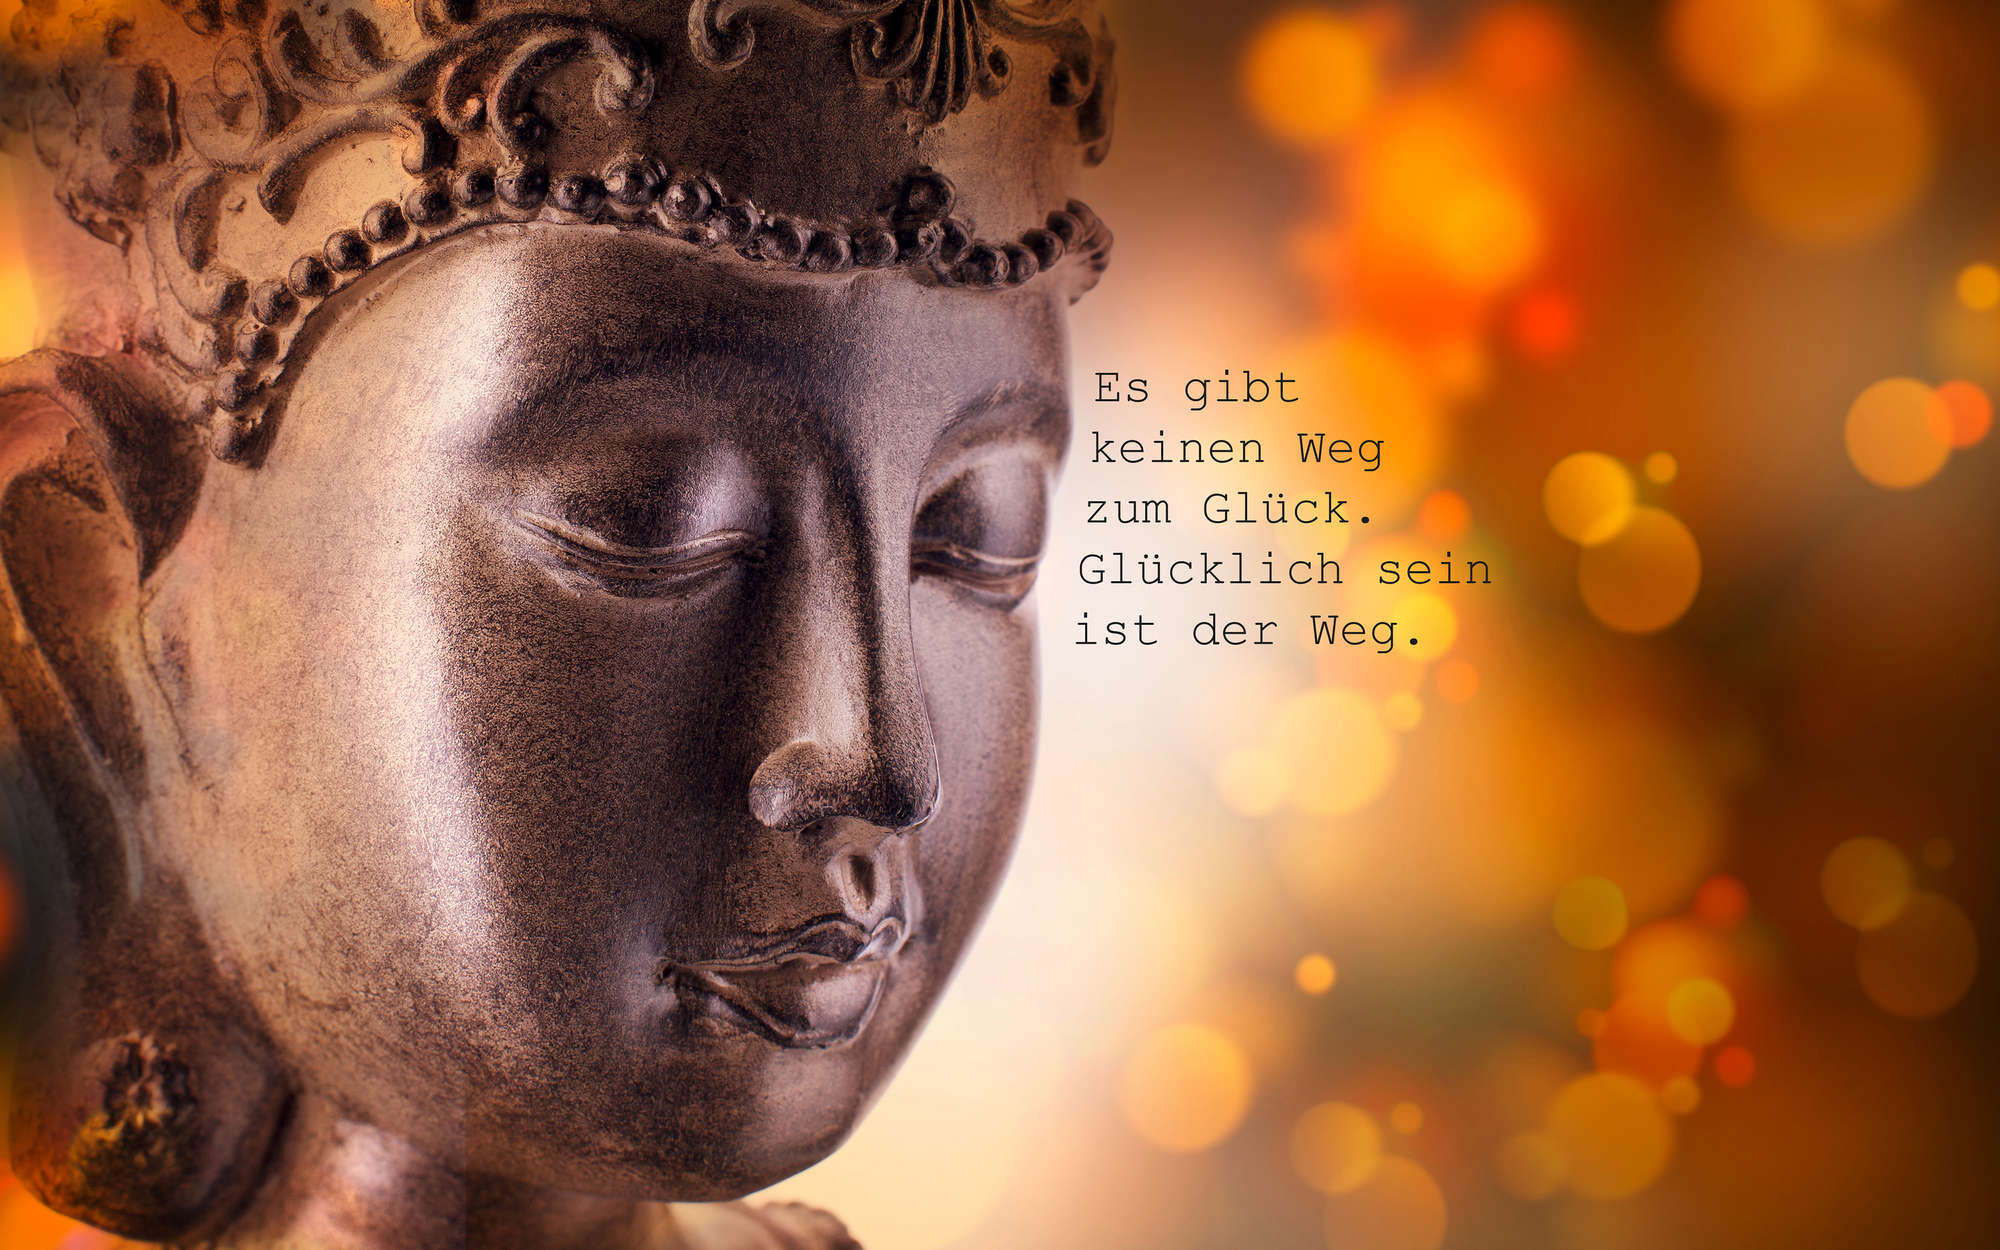             Digital behang Boeddha met geluk letters - Premium glad fleece
        